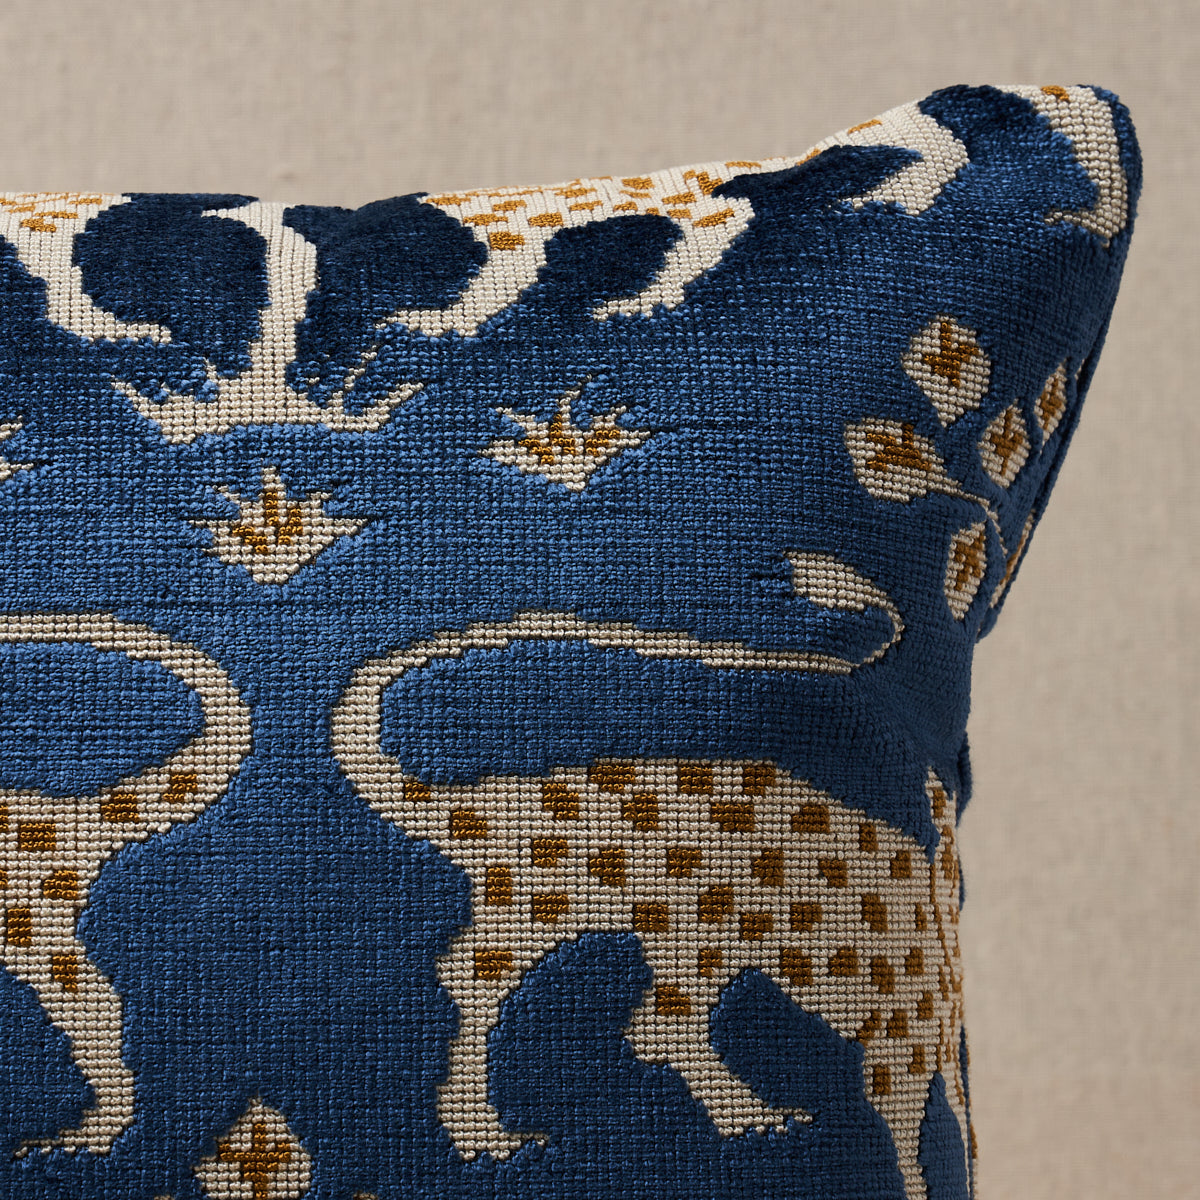 Woodland Leopard Velvet Pillow | Sapphire